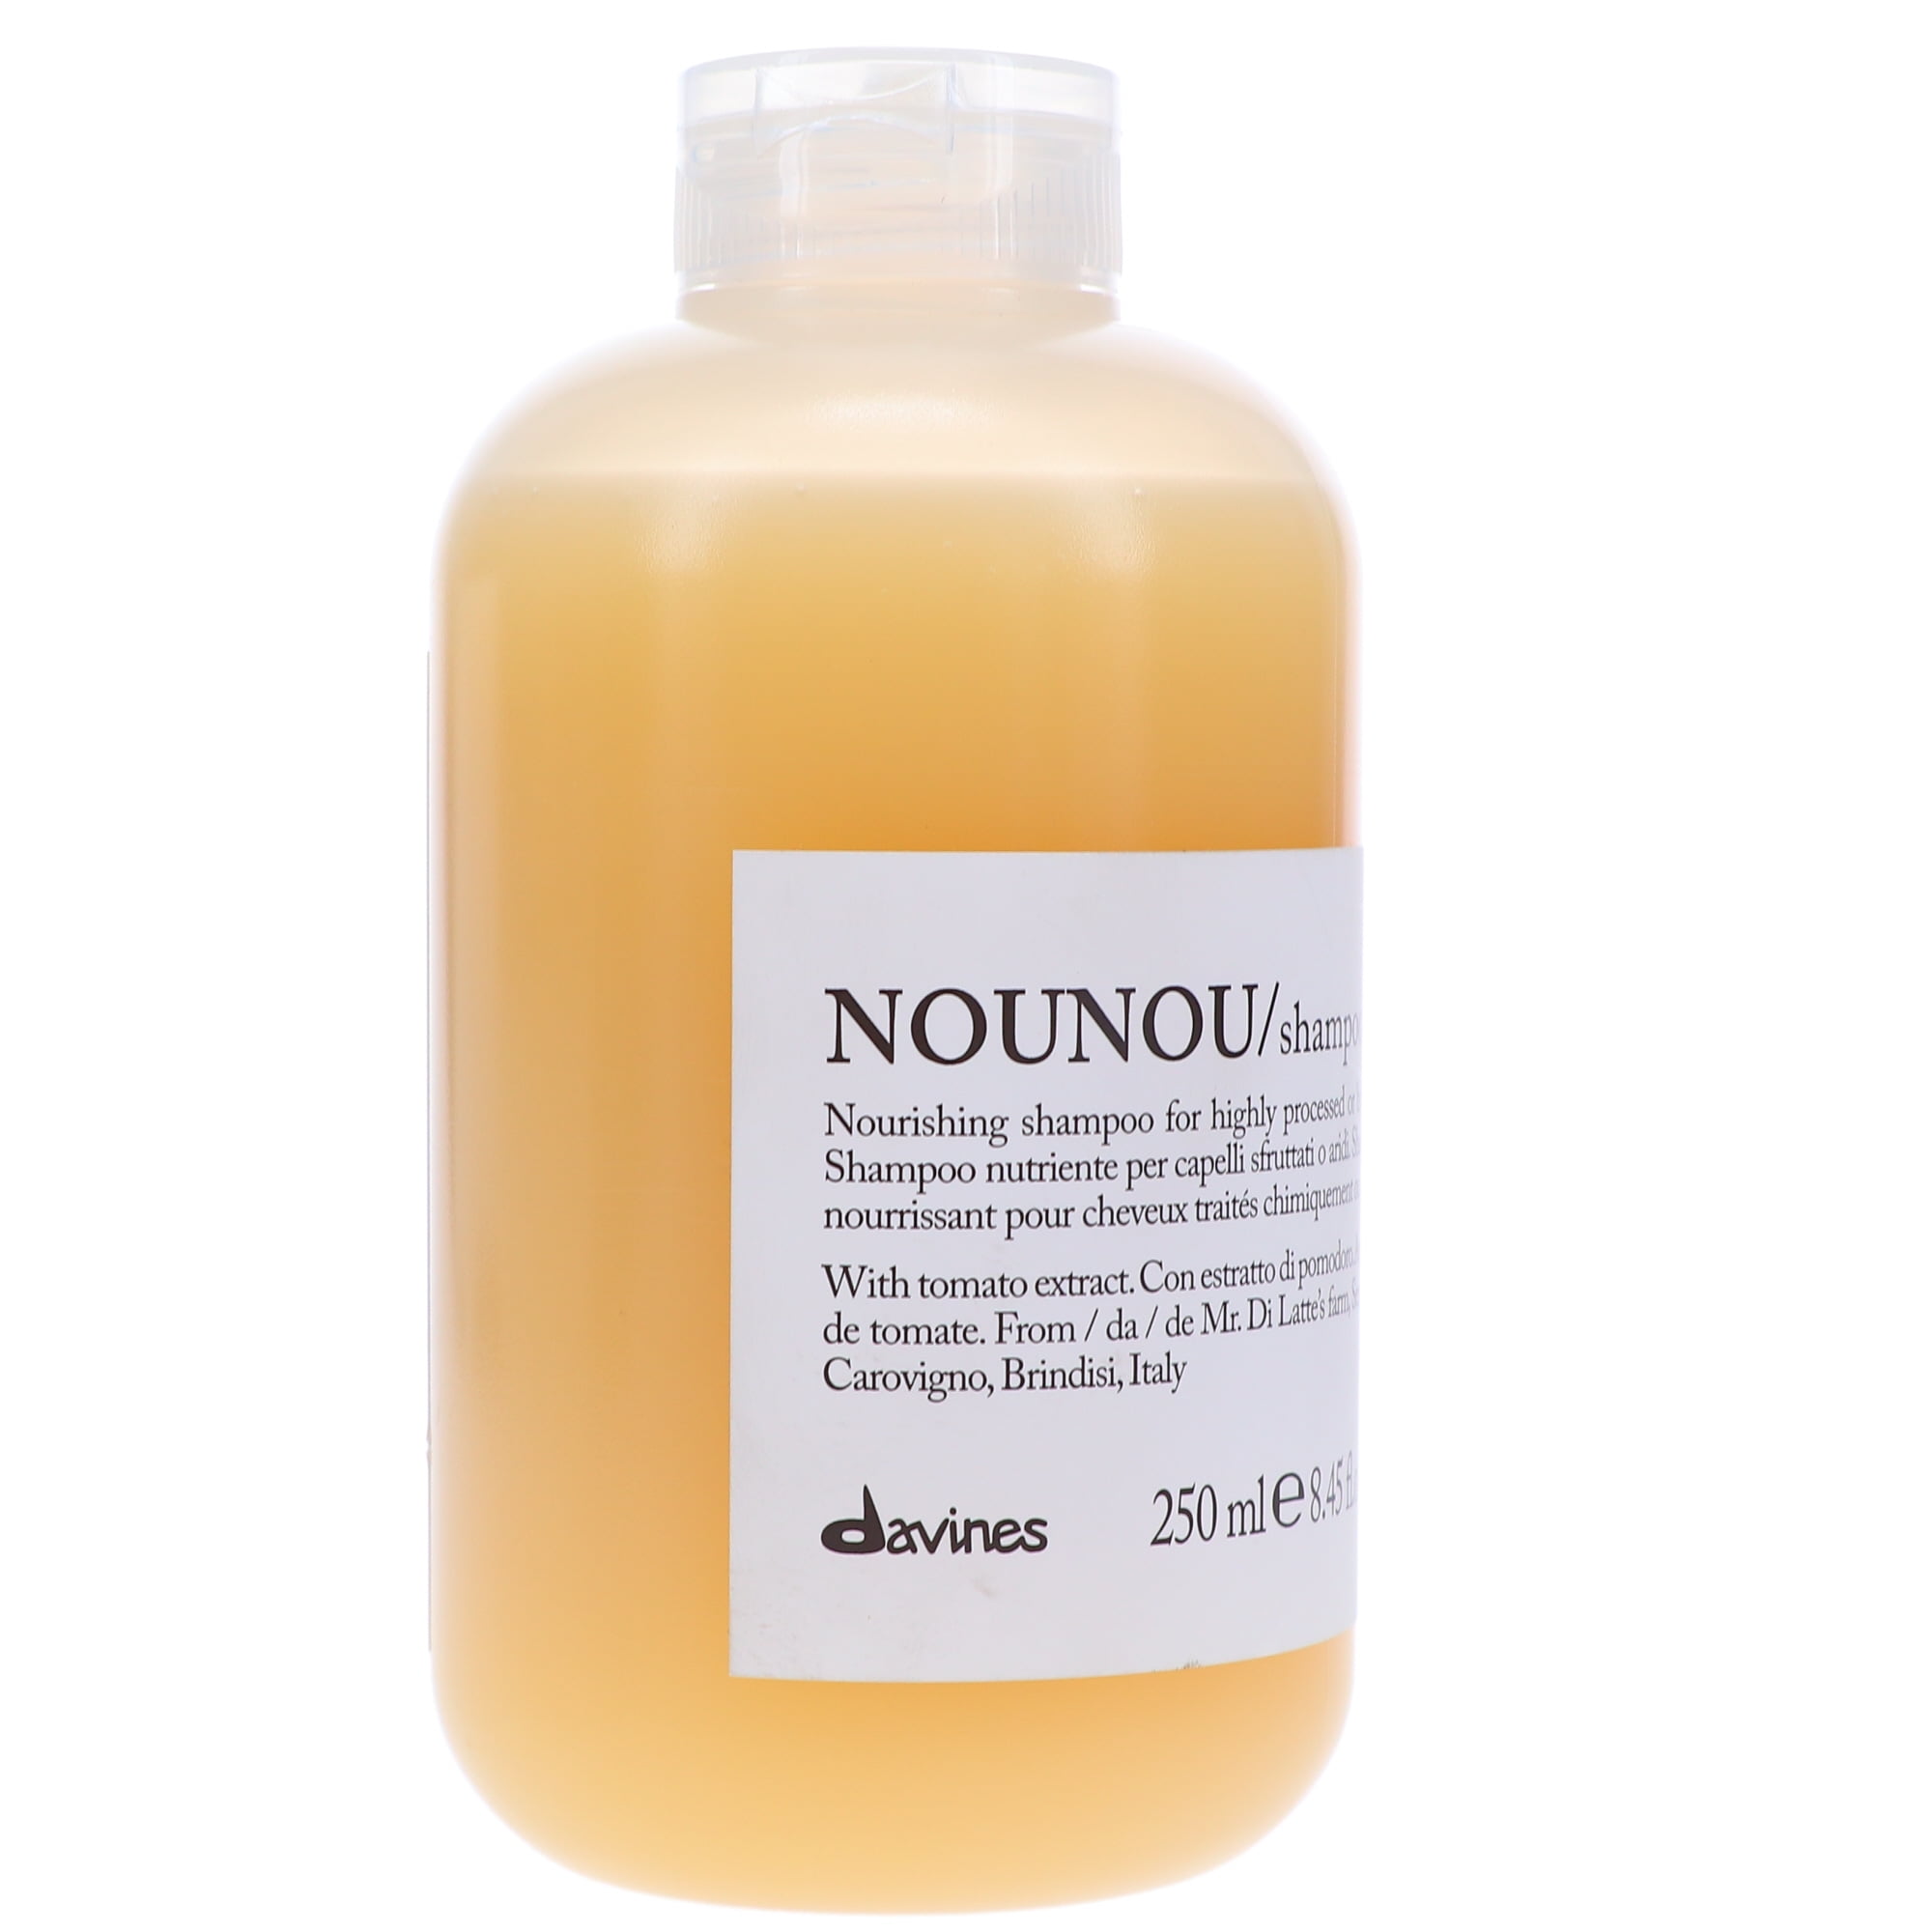 Essential Haircare: Nounou Shampoo